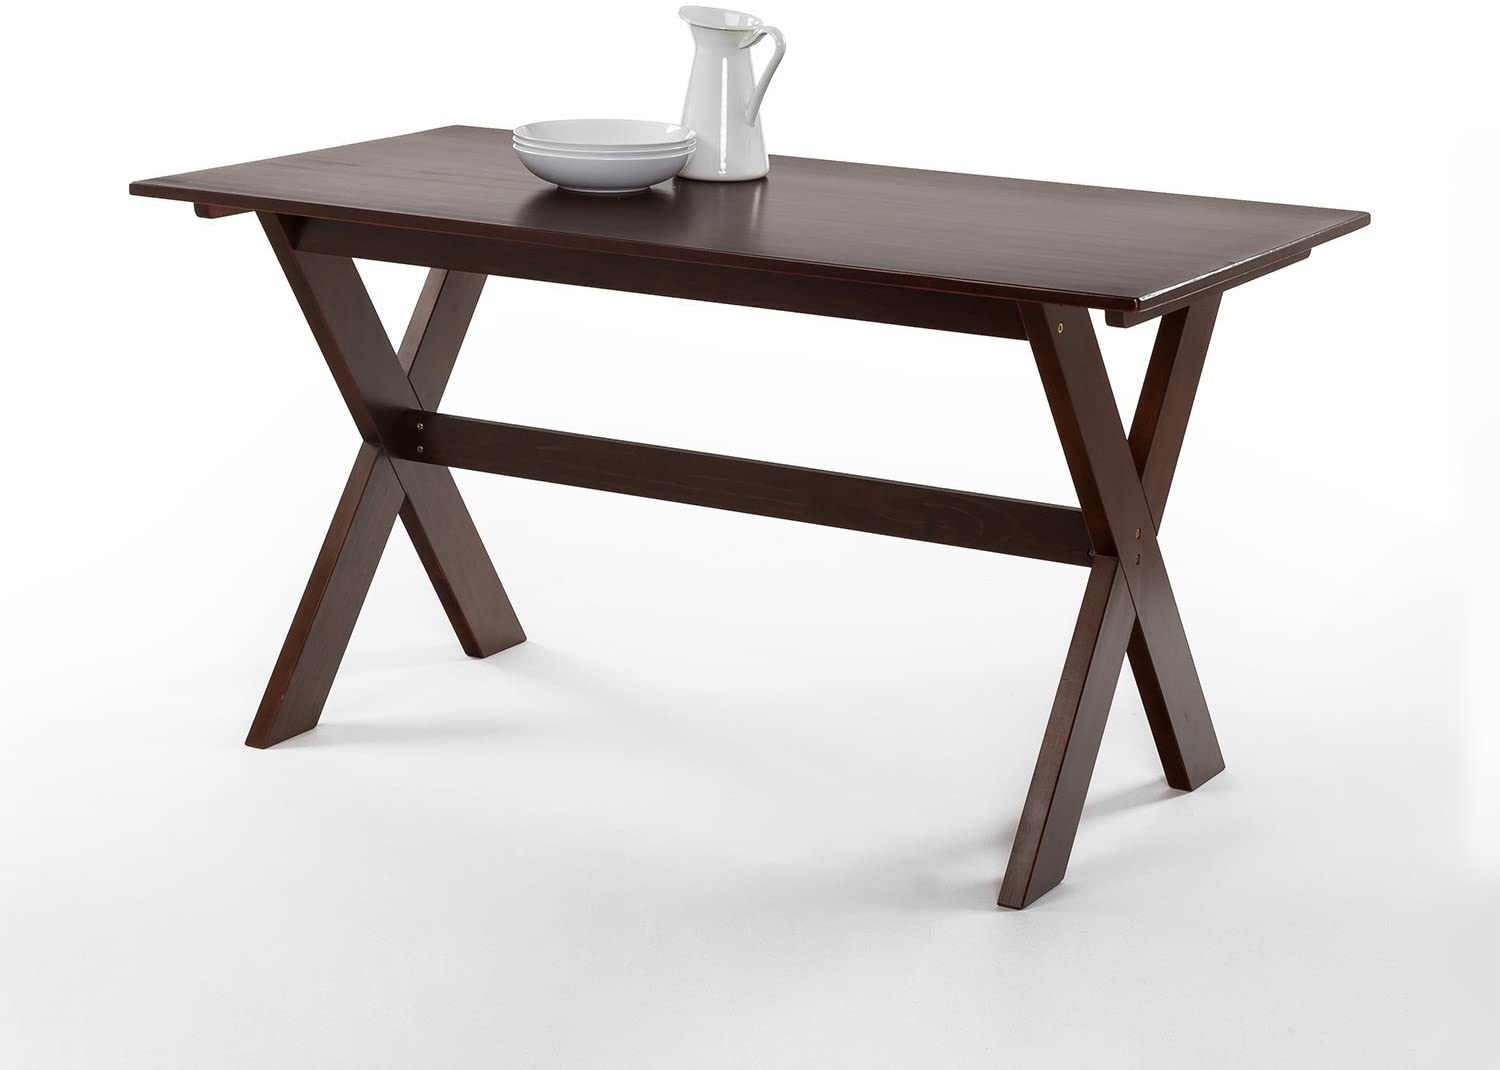 B077H88XWF Zinus William Trestle Large Wood Dining Table / Espresso